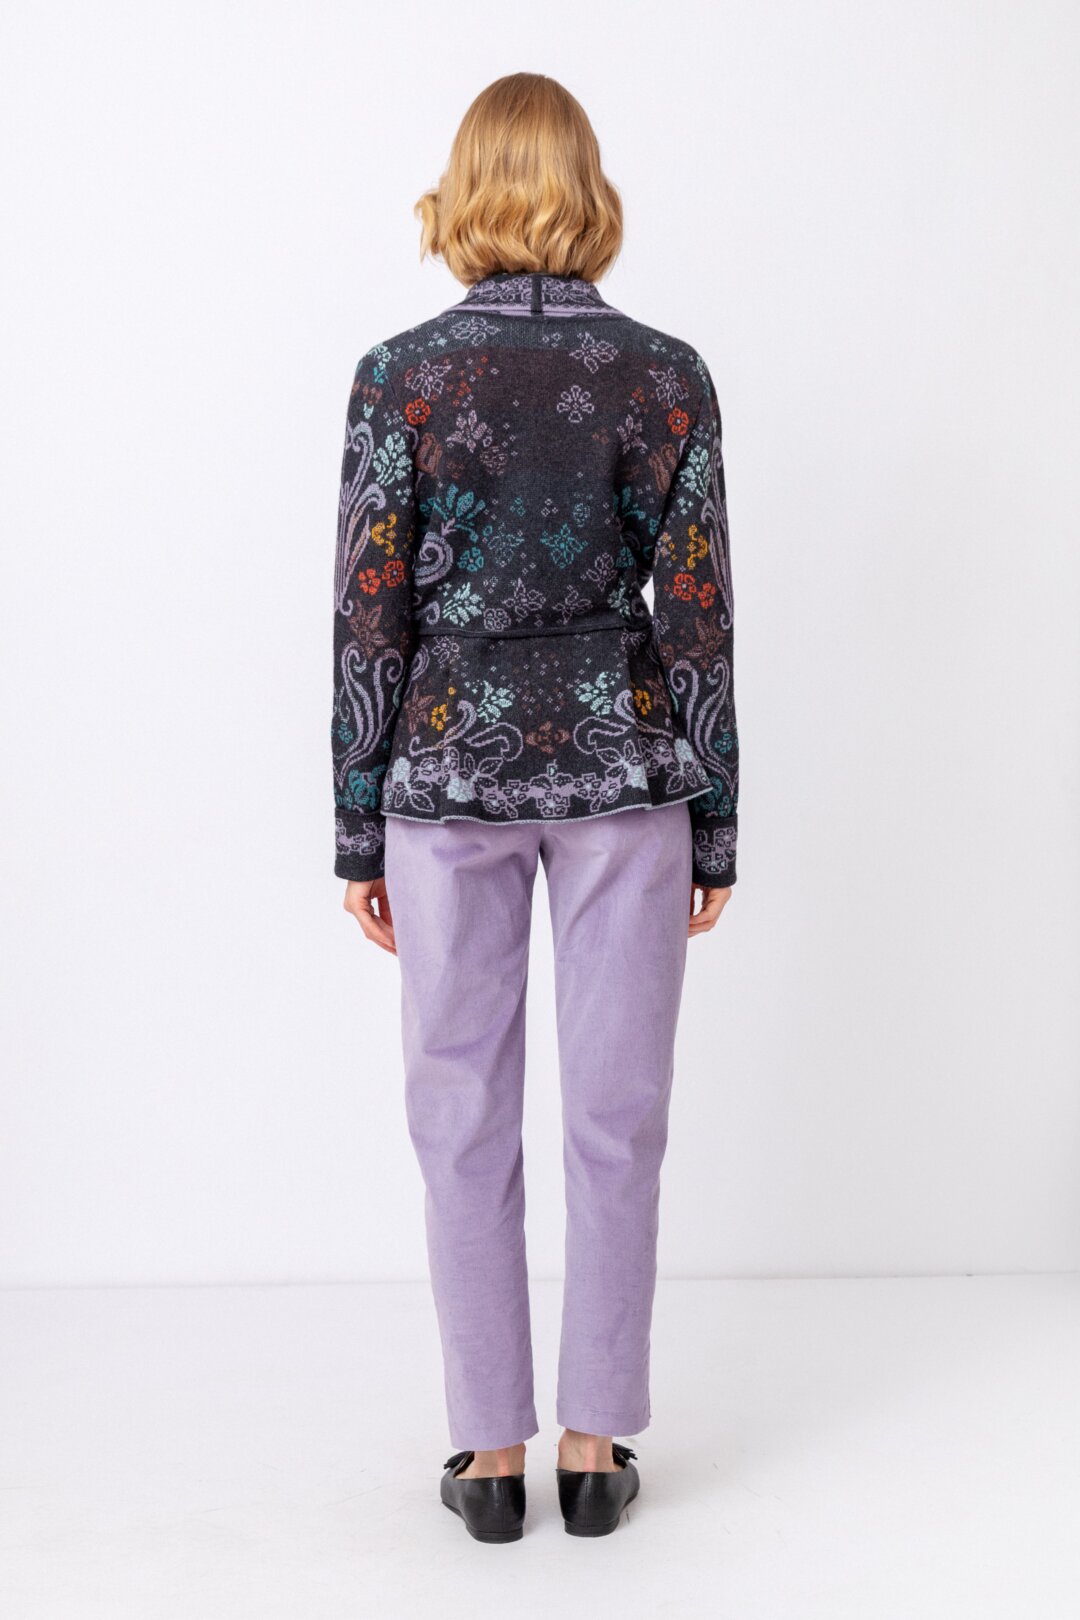 Shawl-Collar Jacket, Grasset Floral Pattern